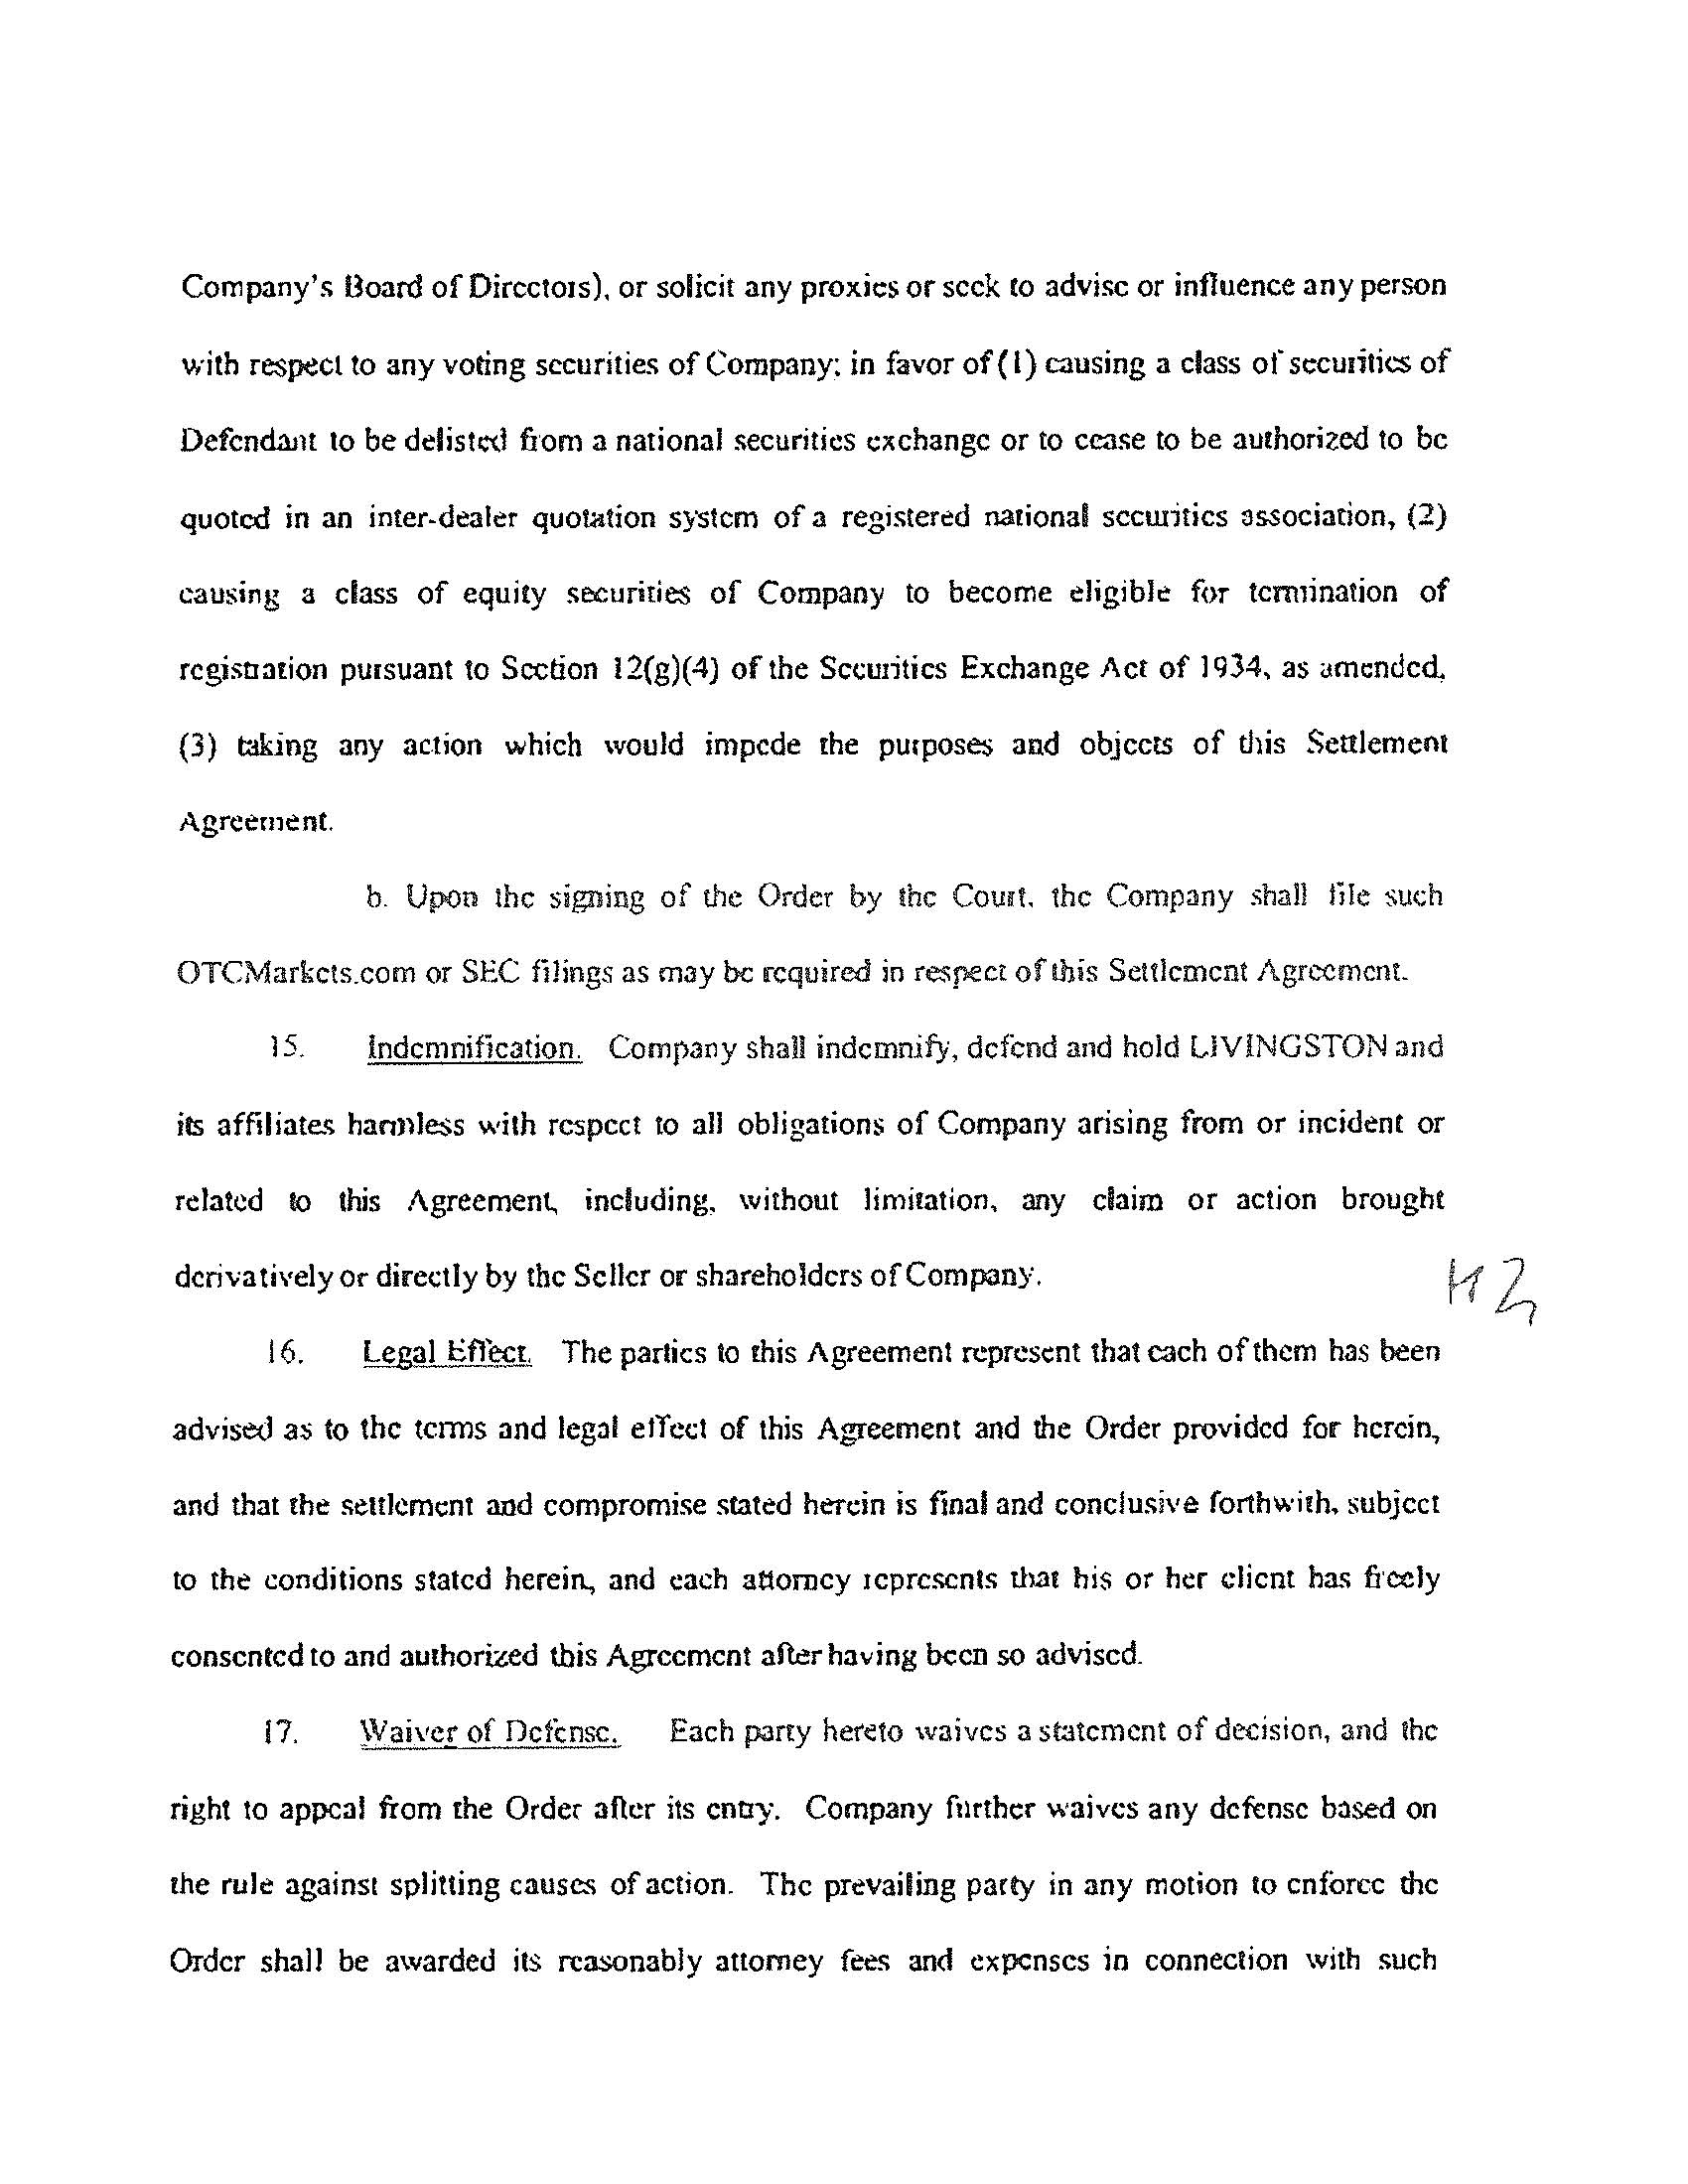 Settlement Agreement_Page_12.jpg